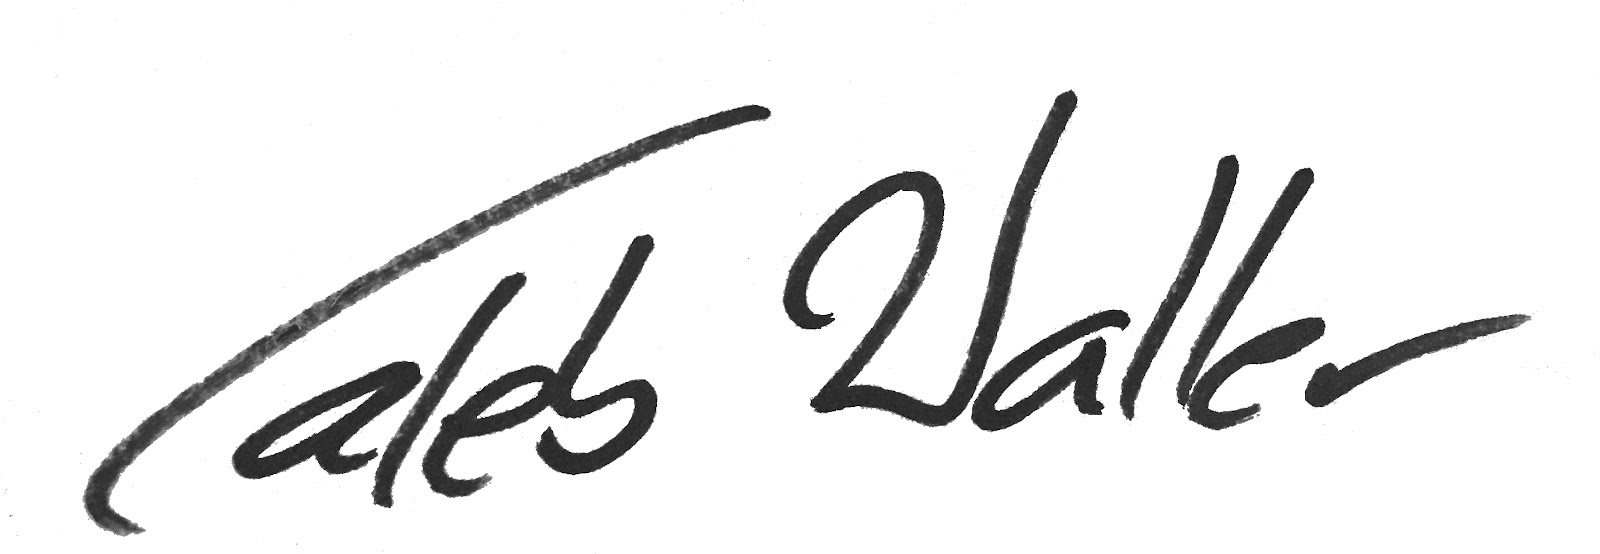 Caleb's signature 3.jpg